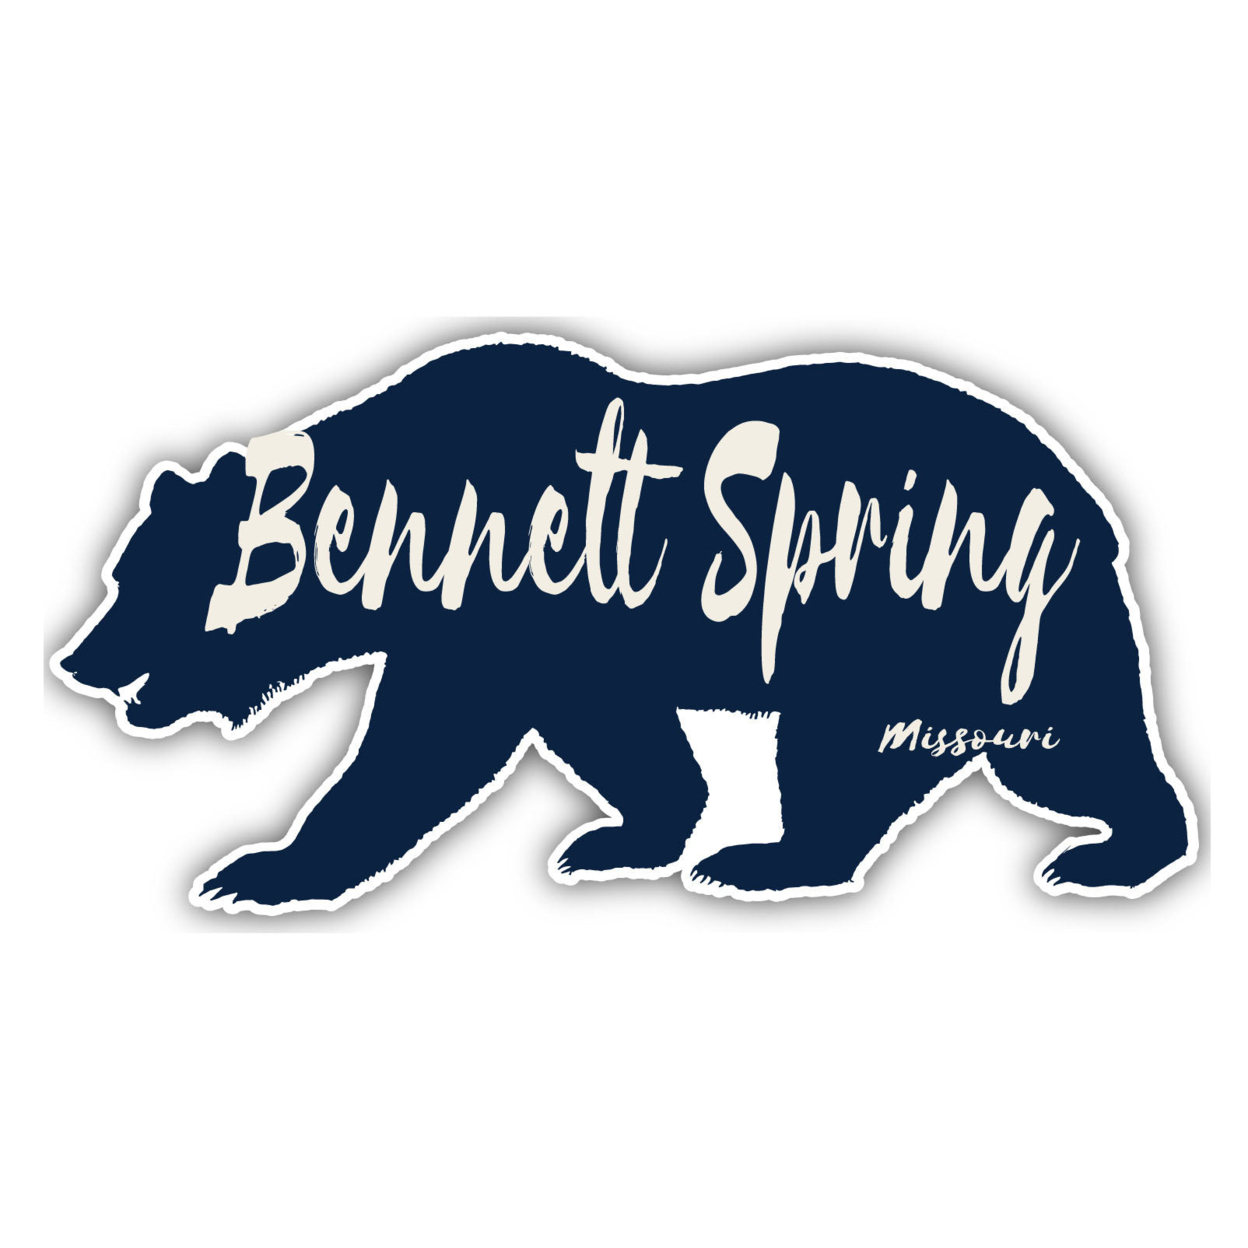 Bennett Spring Missouri Souvenir Decorative Stickers (Choose Theme And Size) - Single Unit, 12-Inch, Bear